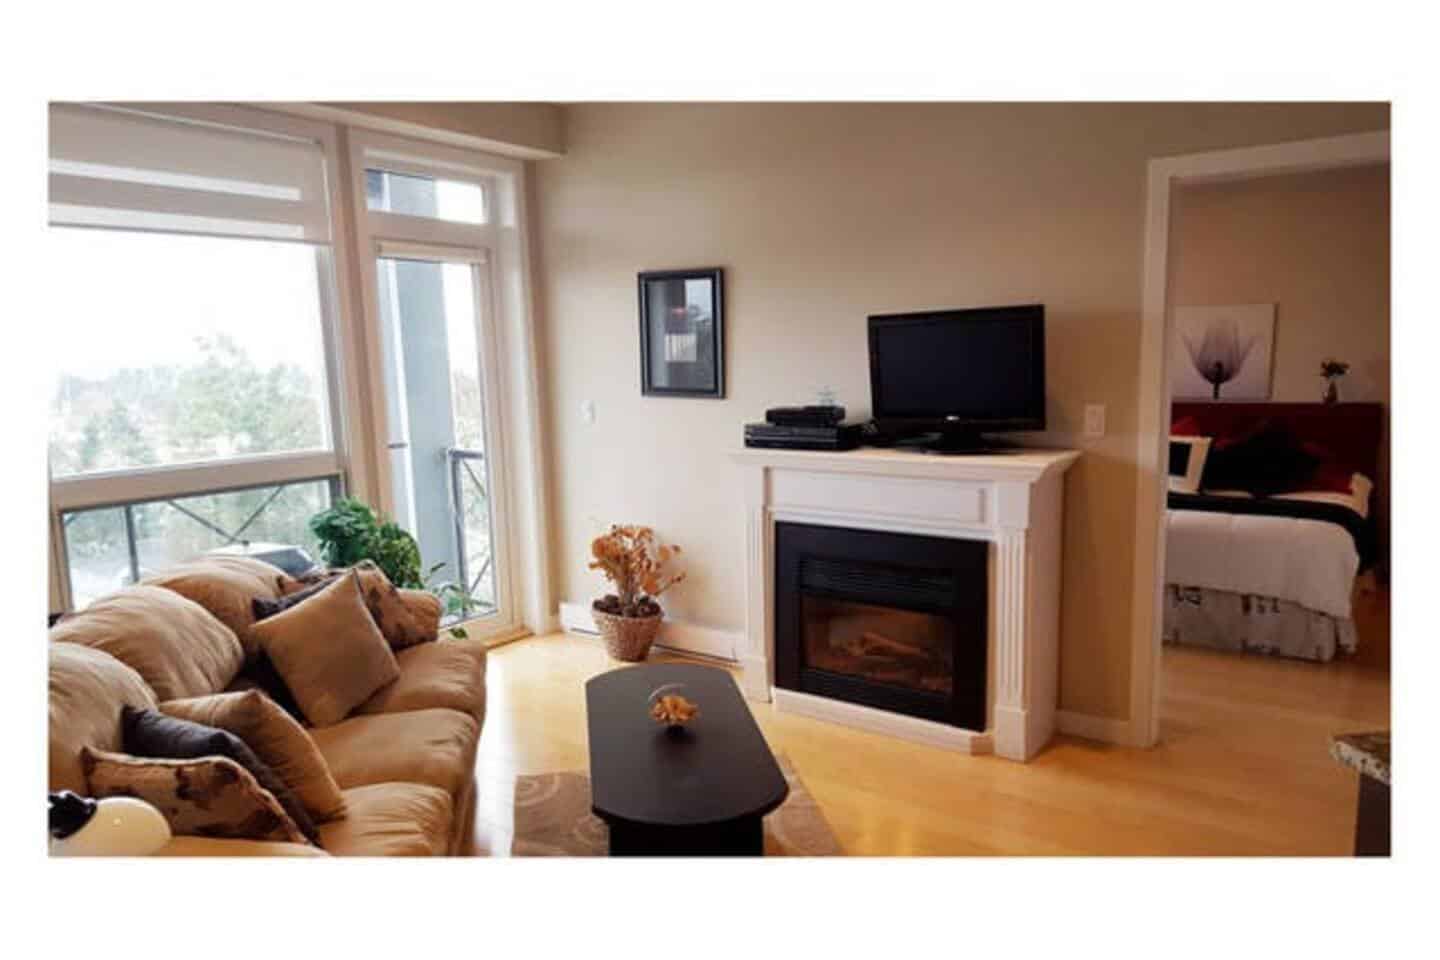 Image of Airbnb rental in Victoria, British Columbia